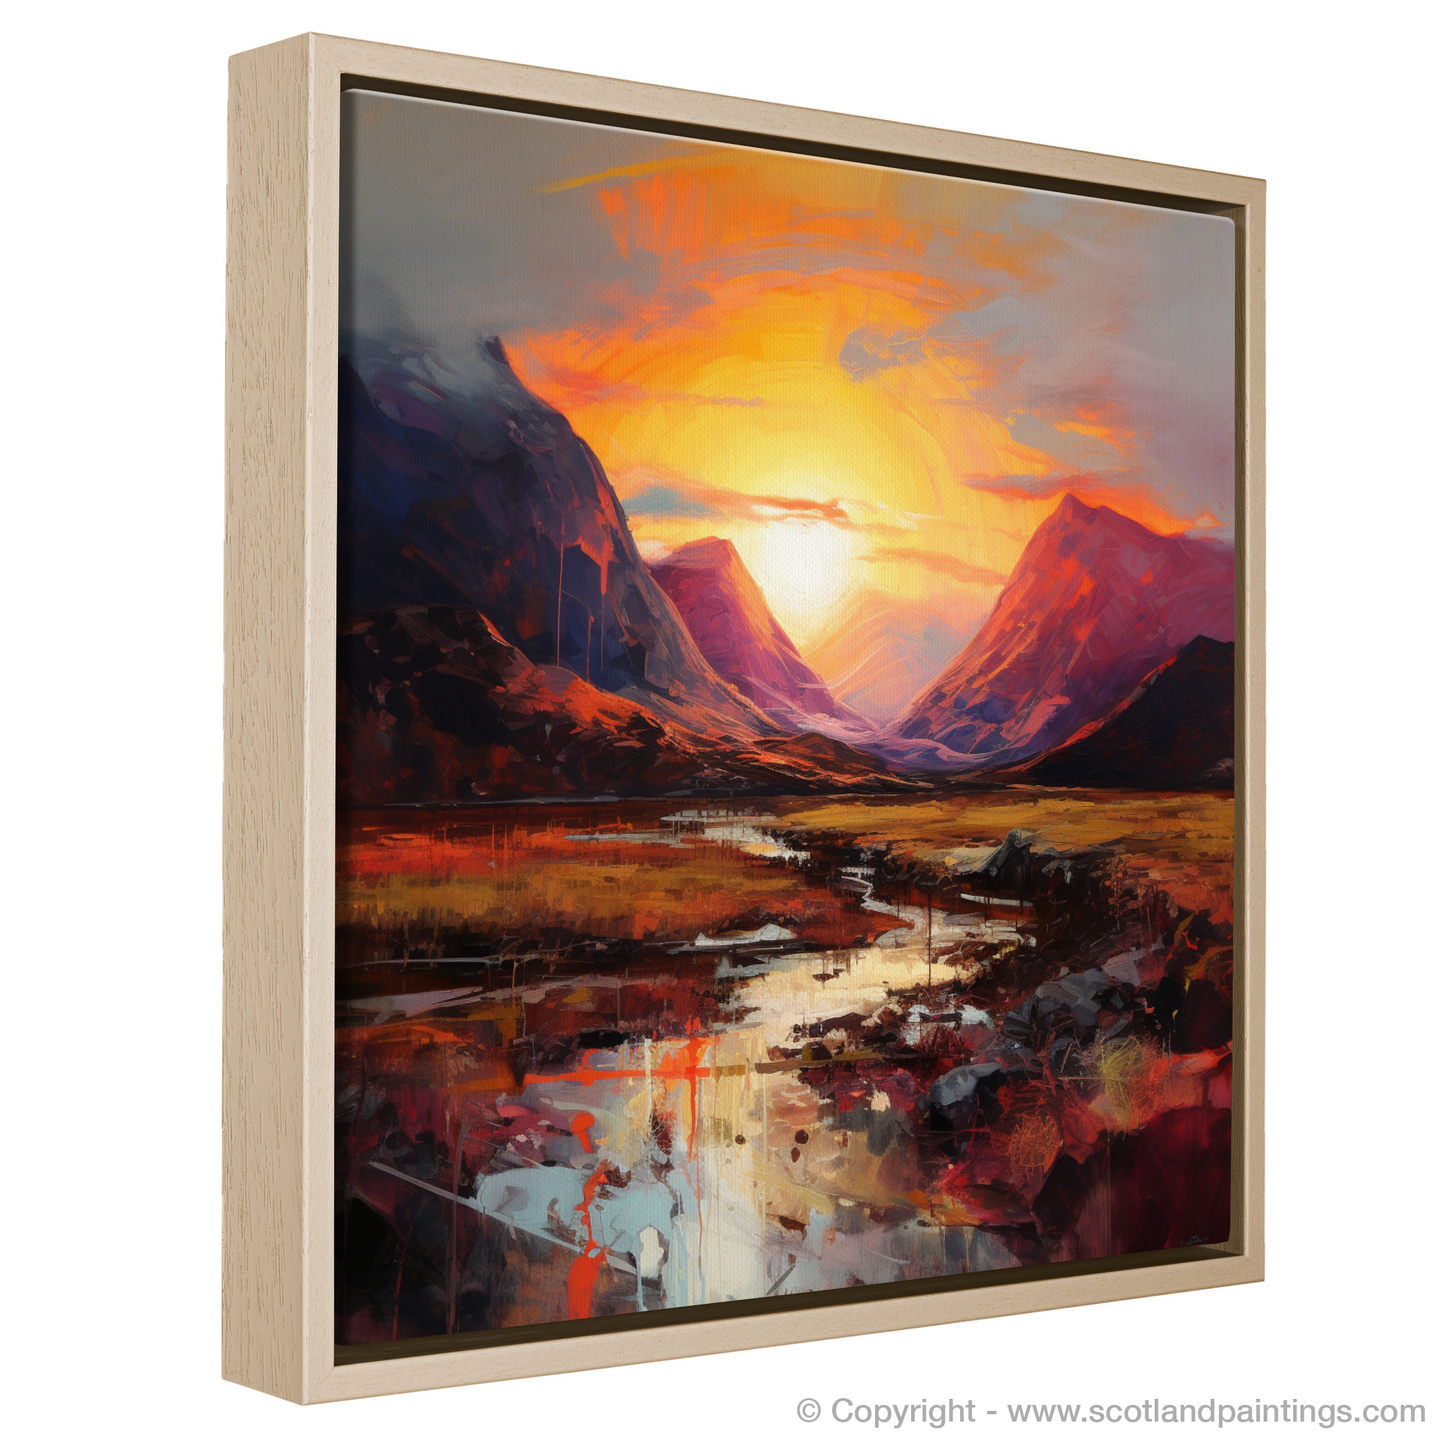 Painting and Art Print of Sunset glow in Glencoe entitled "Fiery Embrace of Glencoe Sunset".